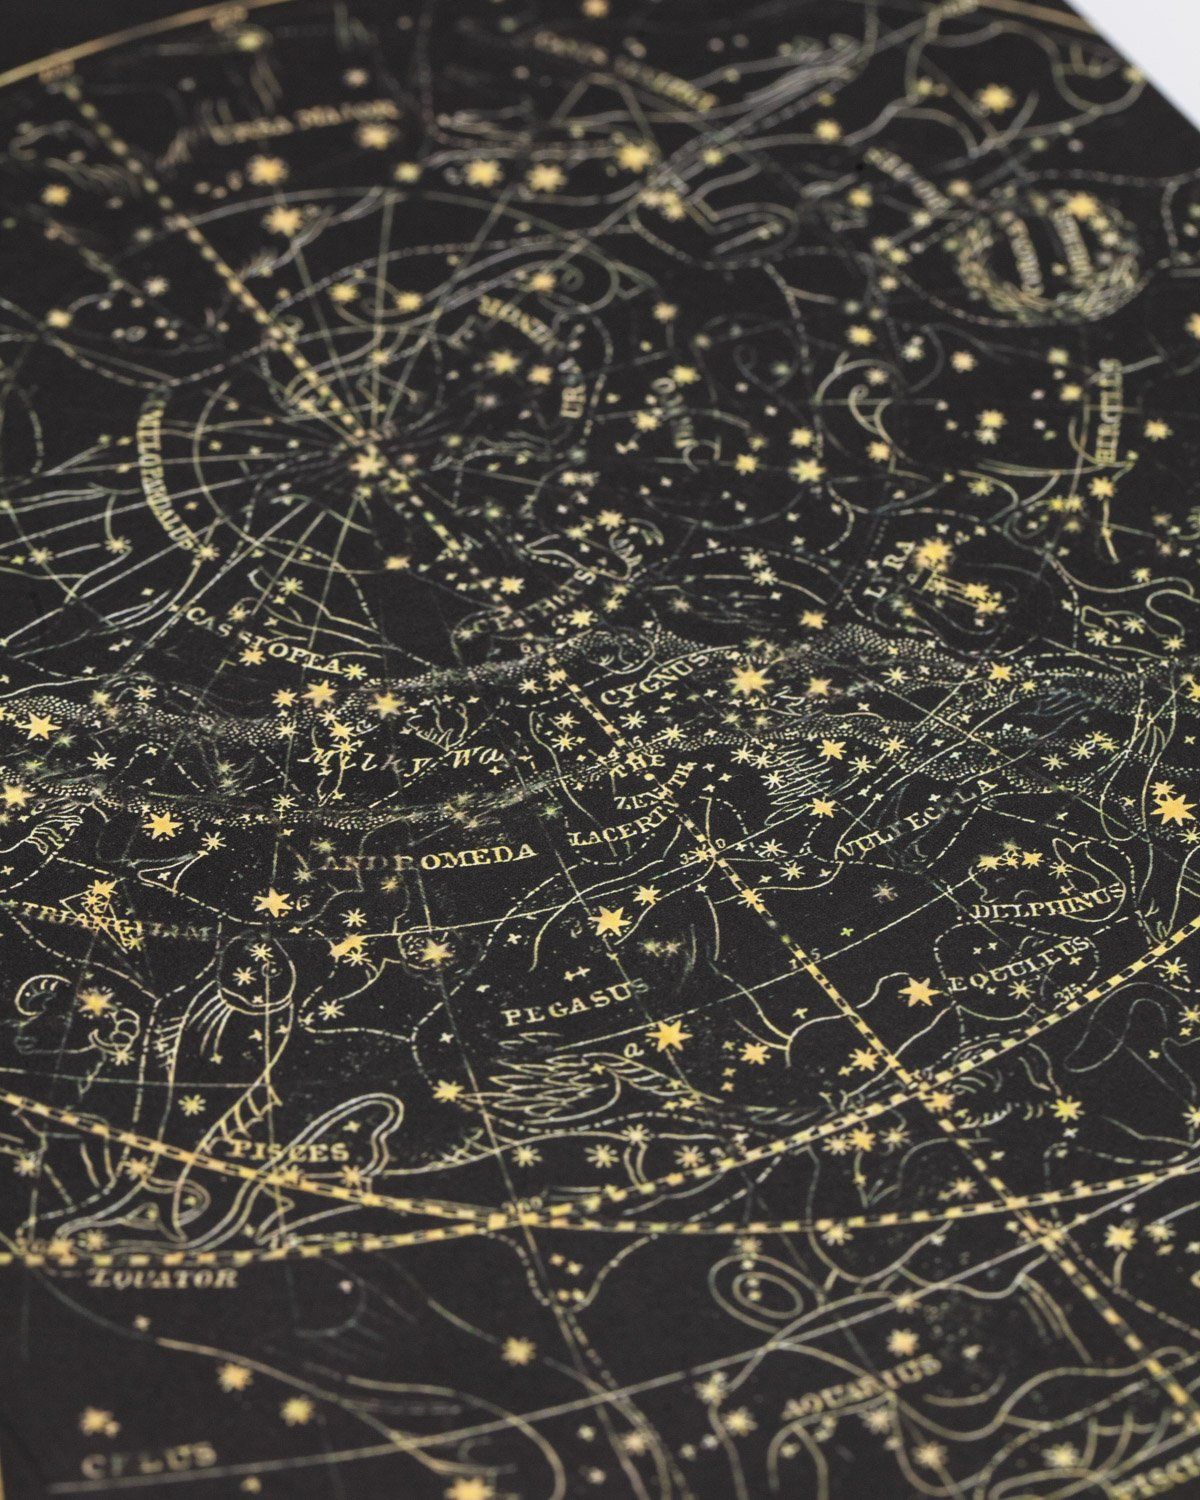 Constellation Flashcards - Quizizz